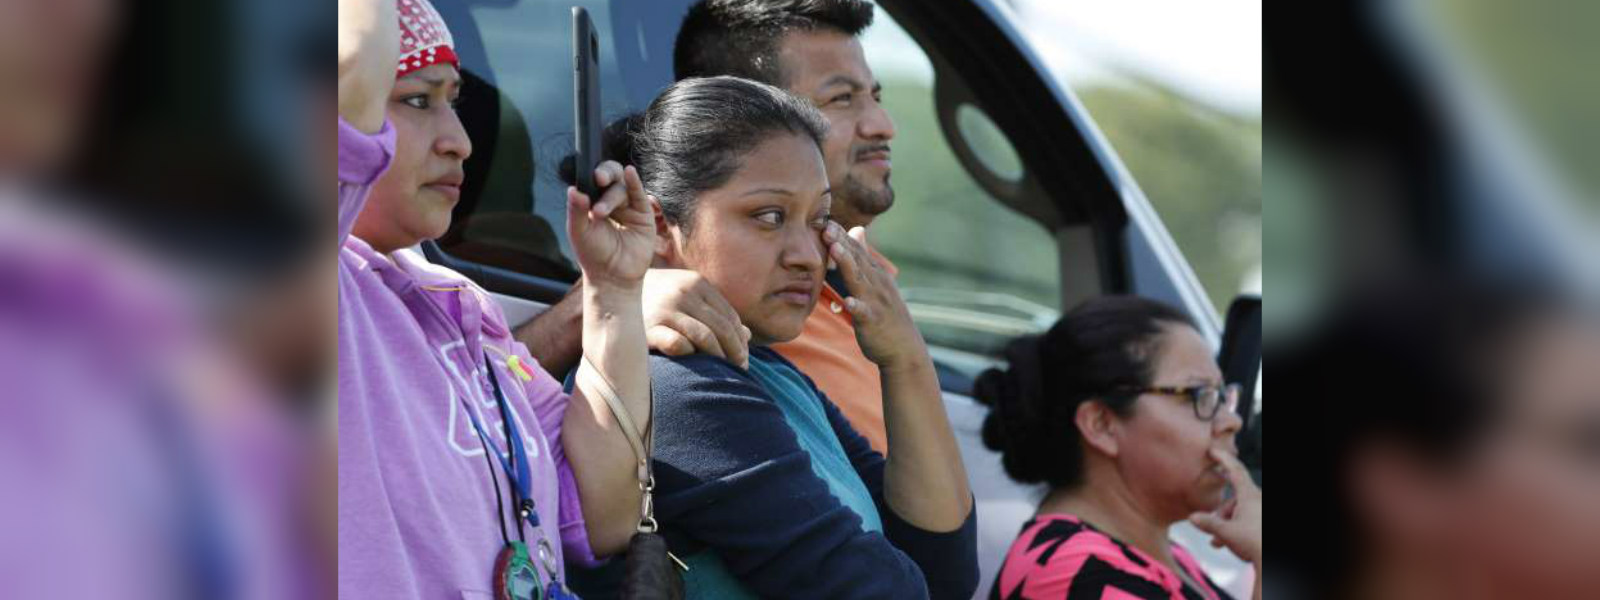 300 released following massive US immigrant raid 